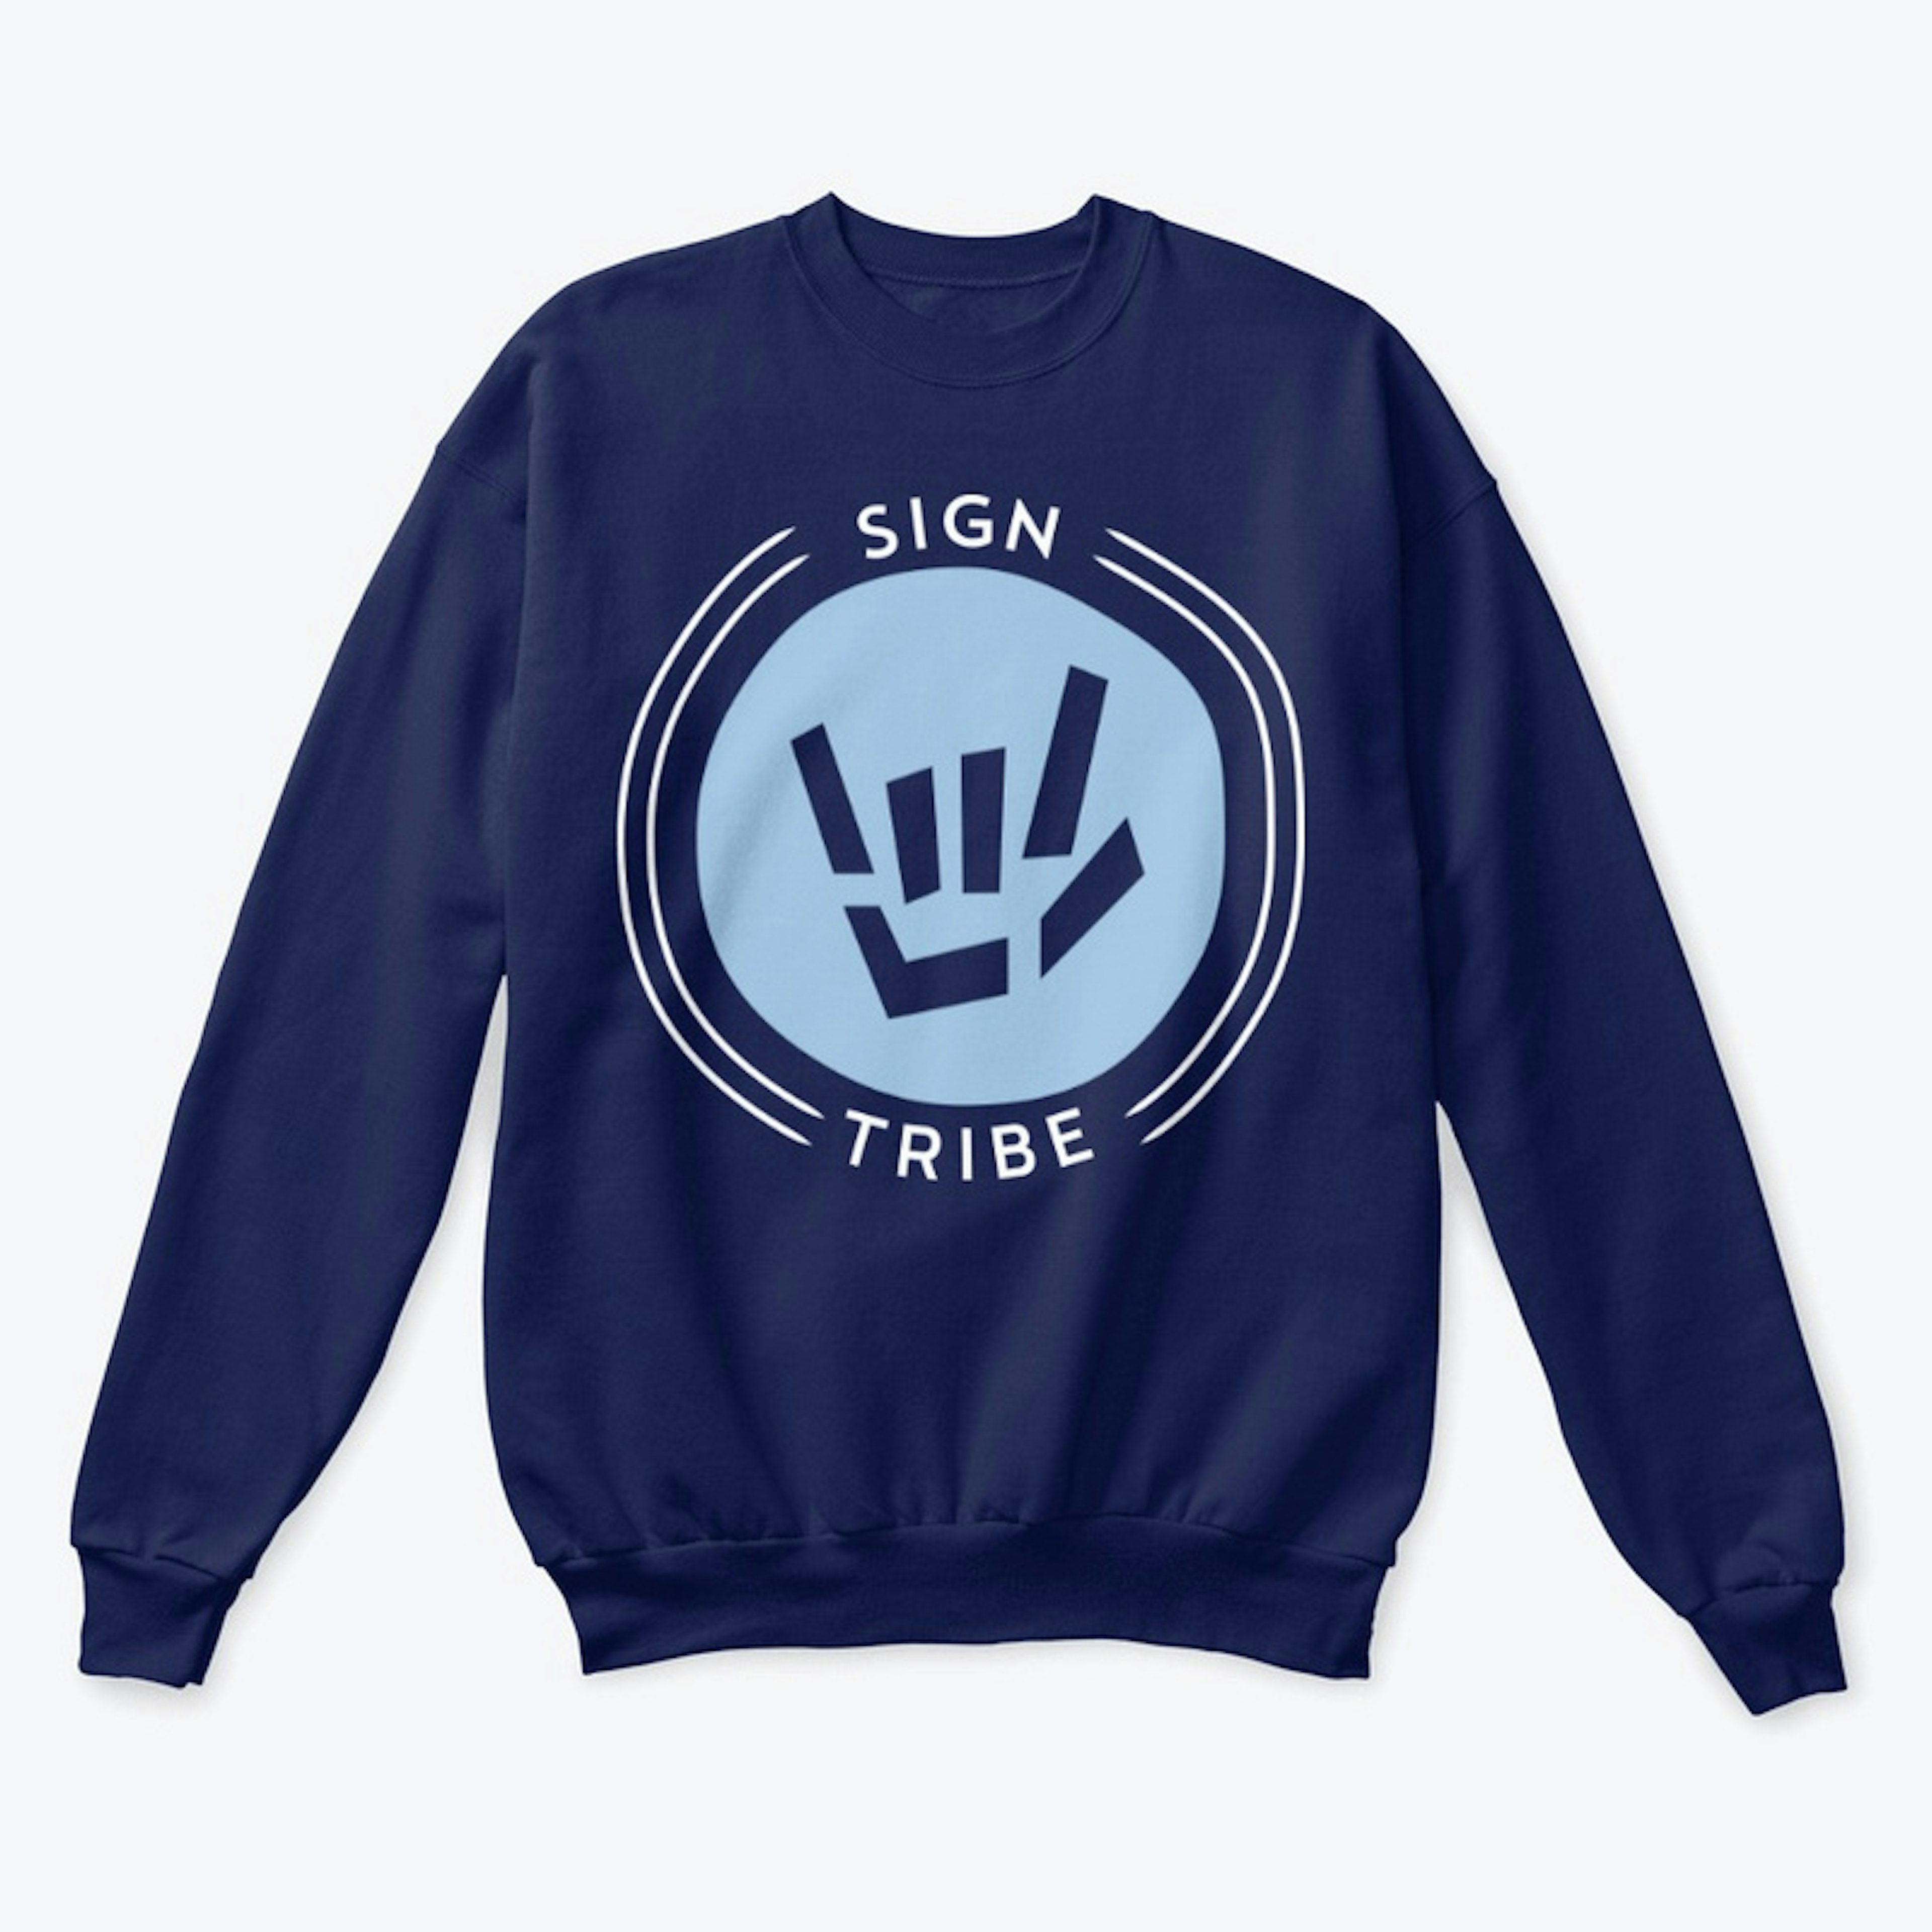 Sign Tribe Sweatshirt